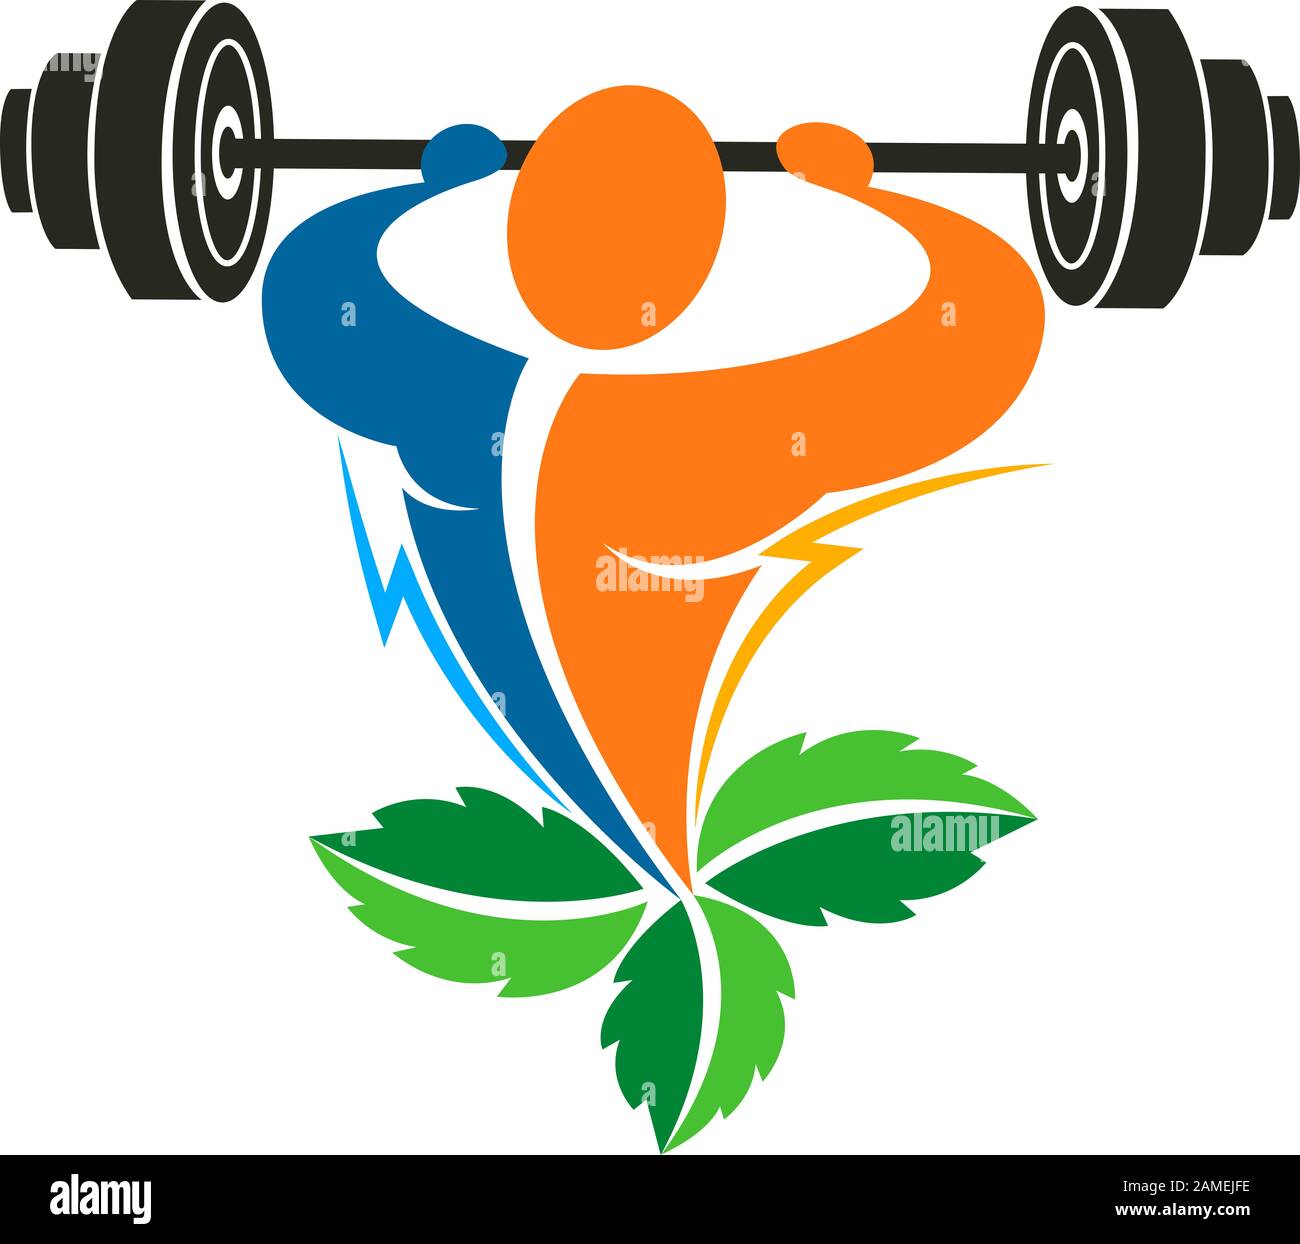 gym herbal health food logo Stock Photo